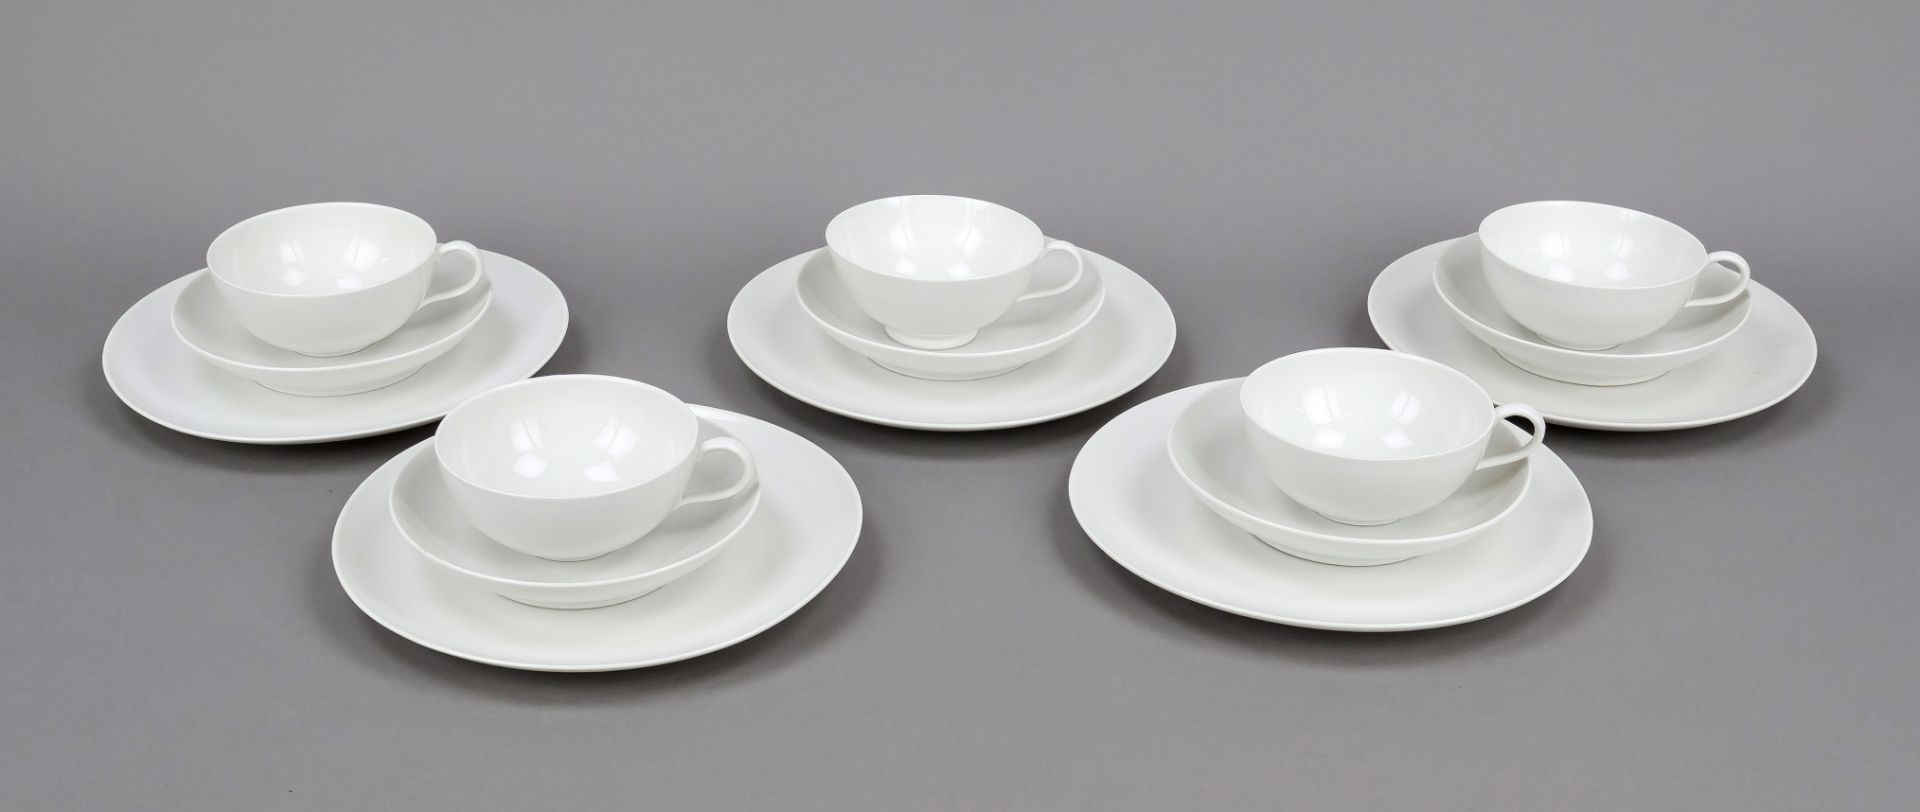 Five tea sets, KPM Berlin, pre-1945 mark, 1st choice, Urbino shape, designed by Trude Petri (Hamburg